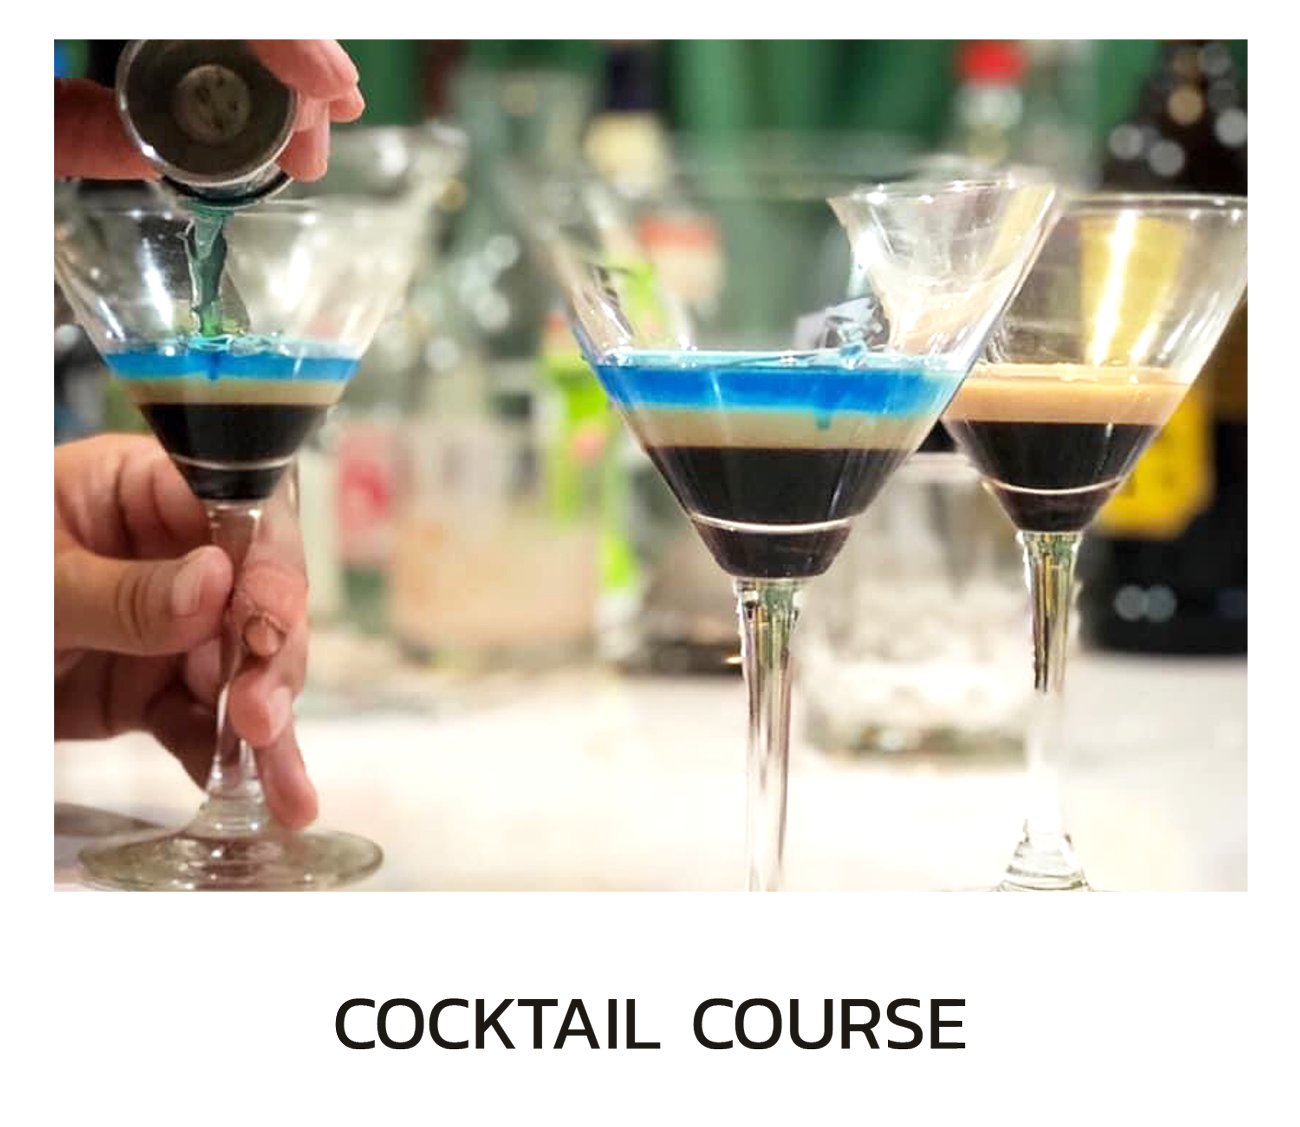 Cocktail Course